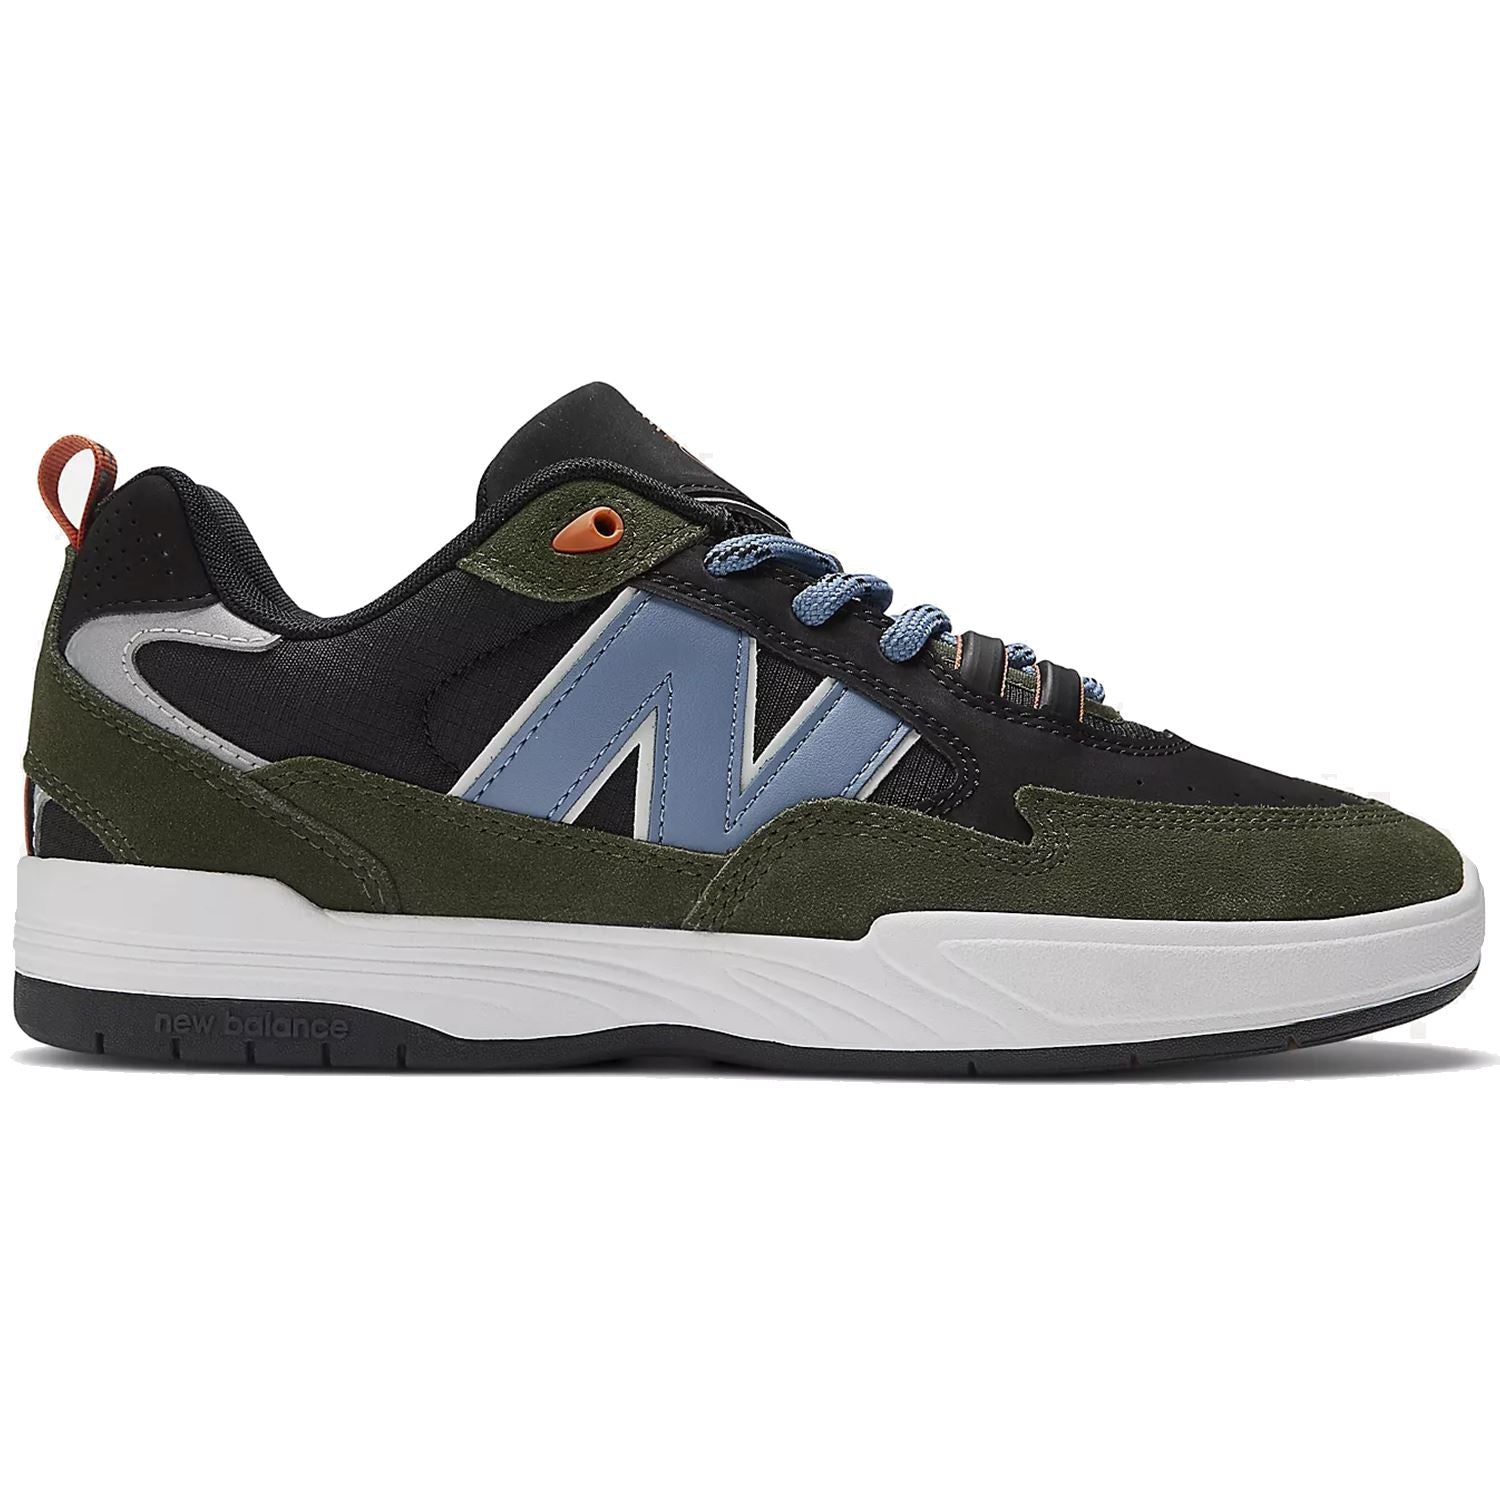 New Balance Numeric Tiago NM808 Green/Black/Blue footwear New Balance Numeric 